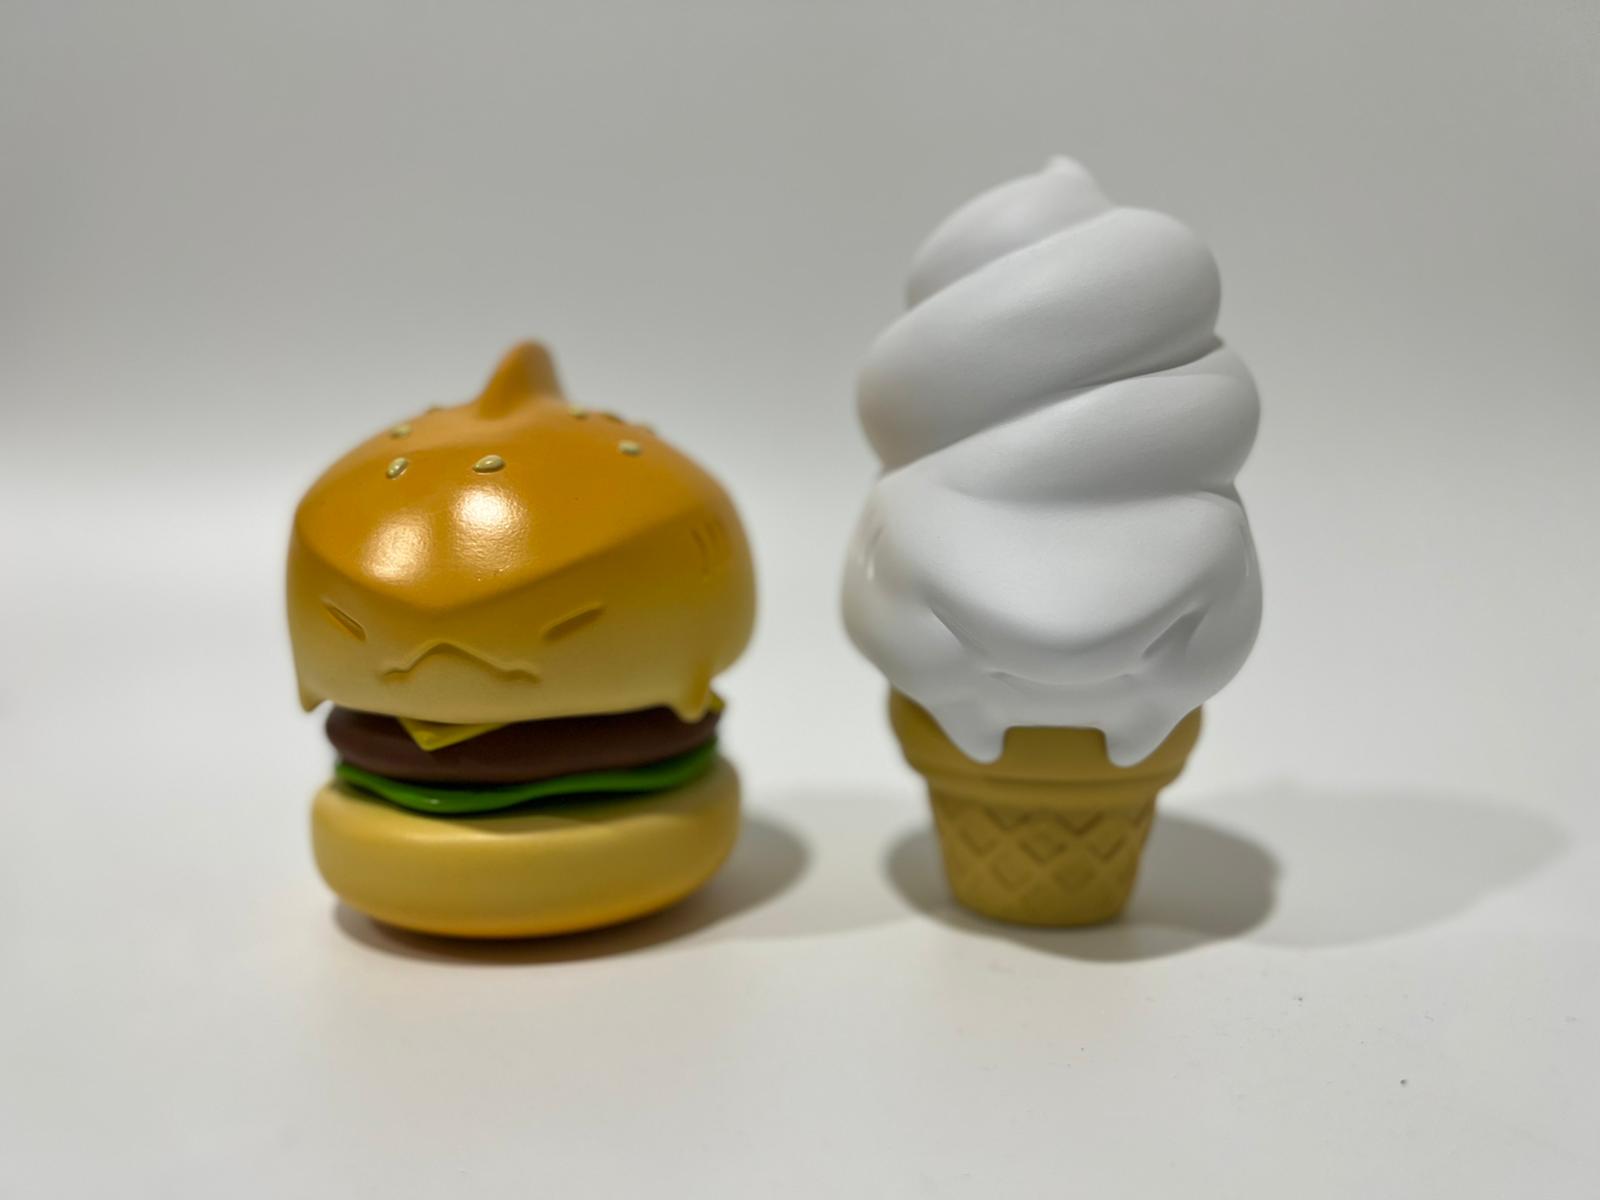 Shark Fast Food Series - Burger & Ice Cream by Pack Kuchu